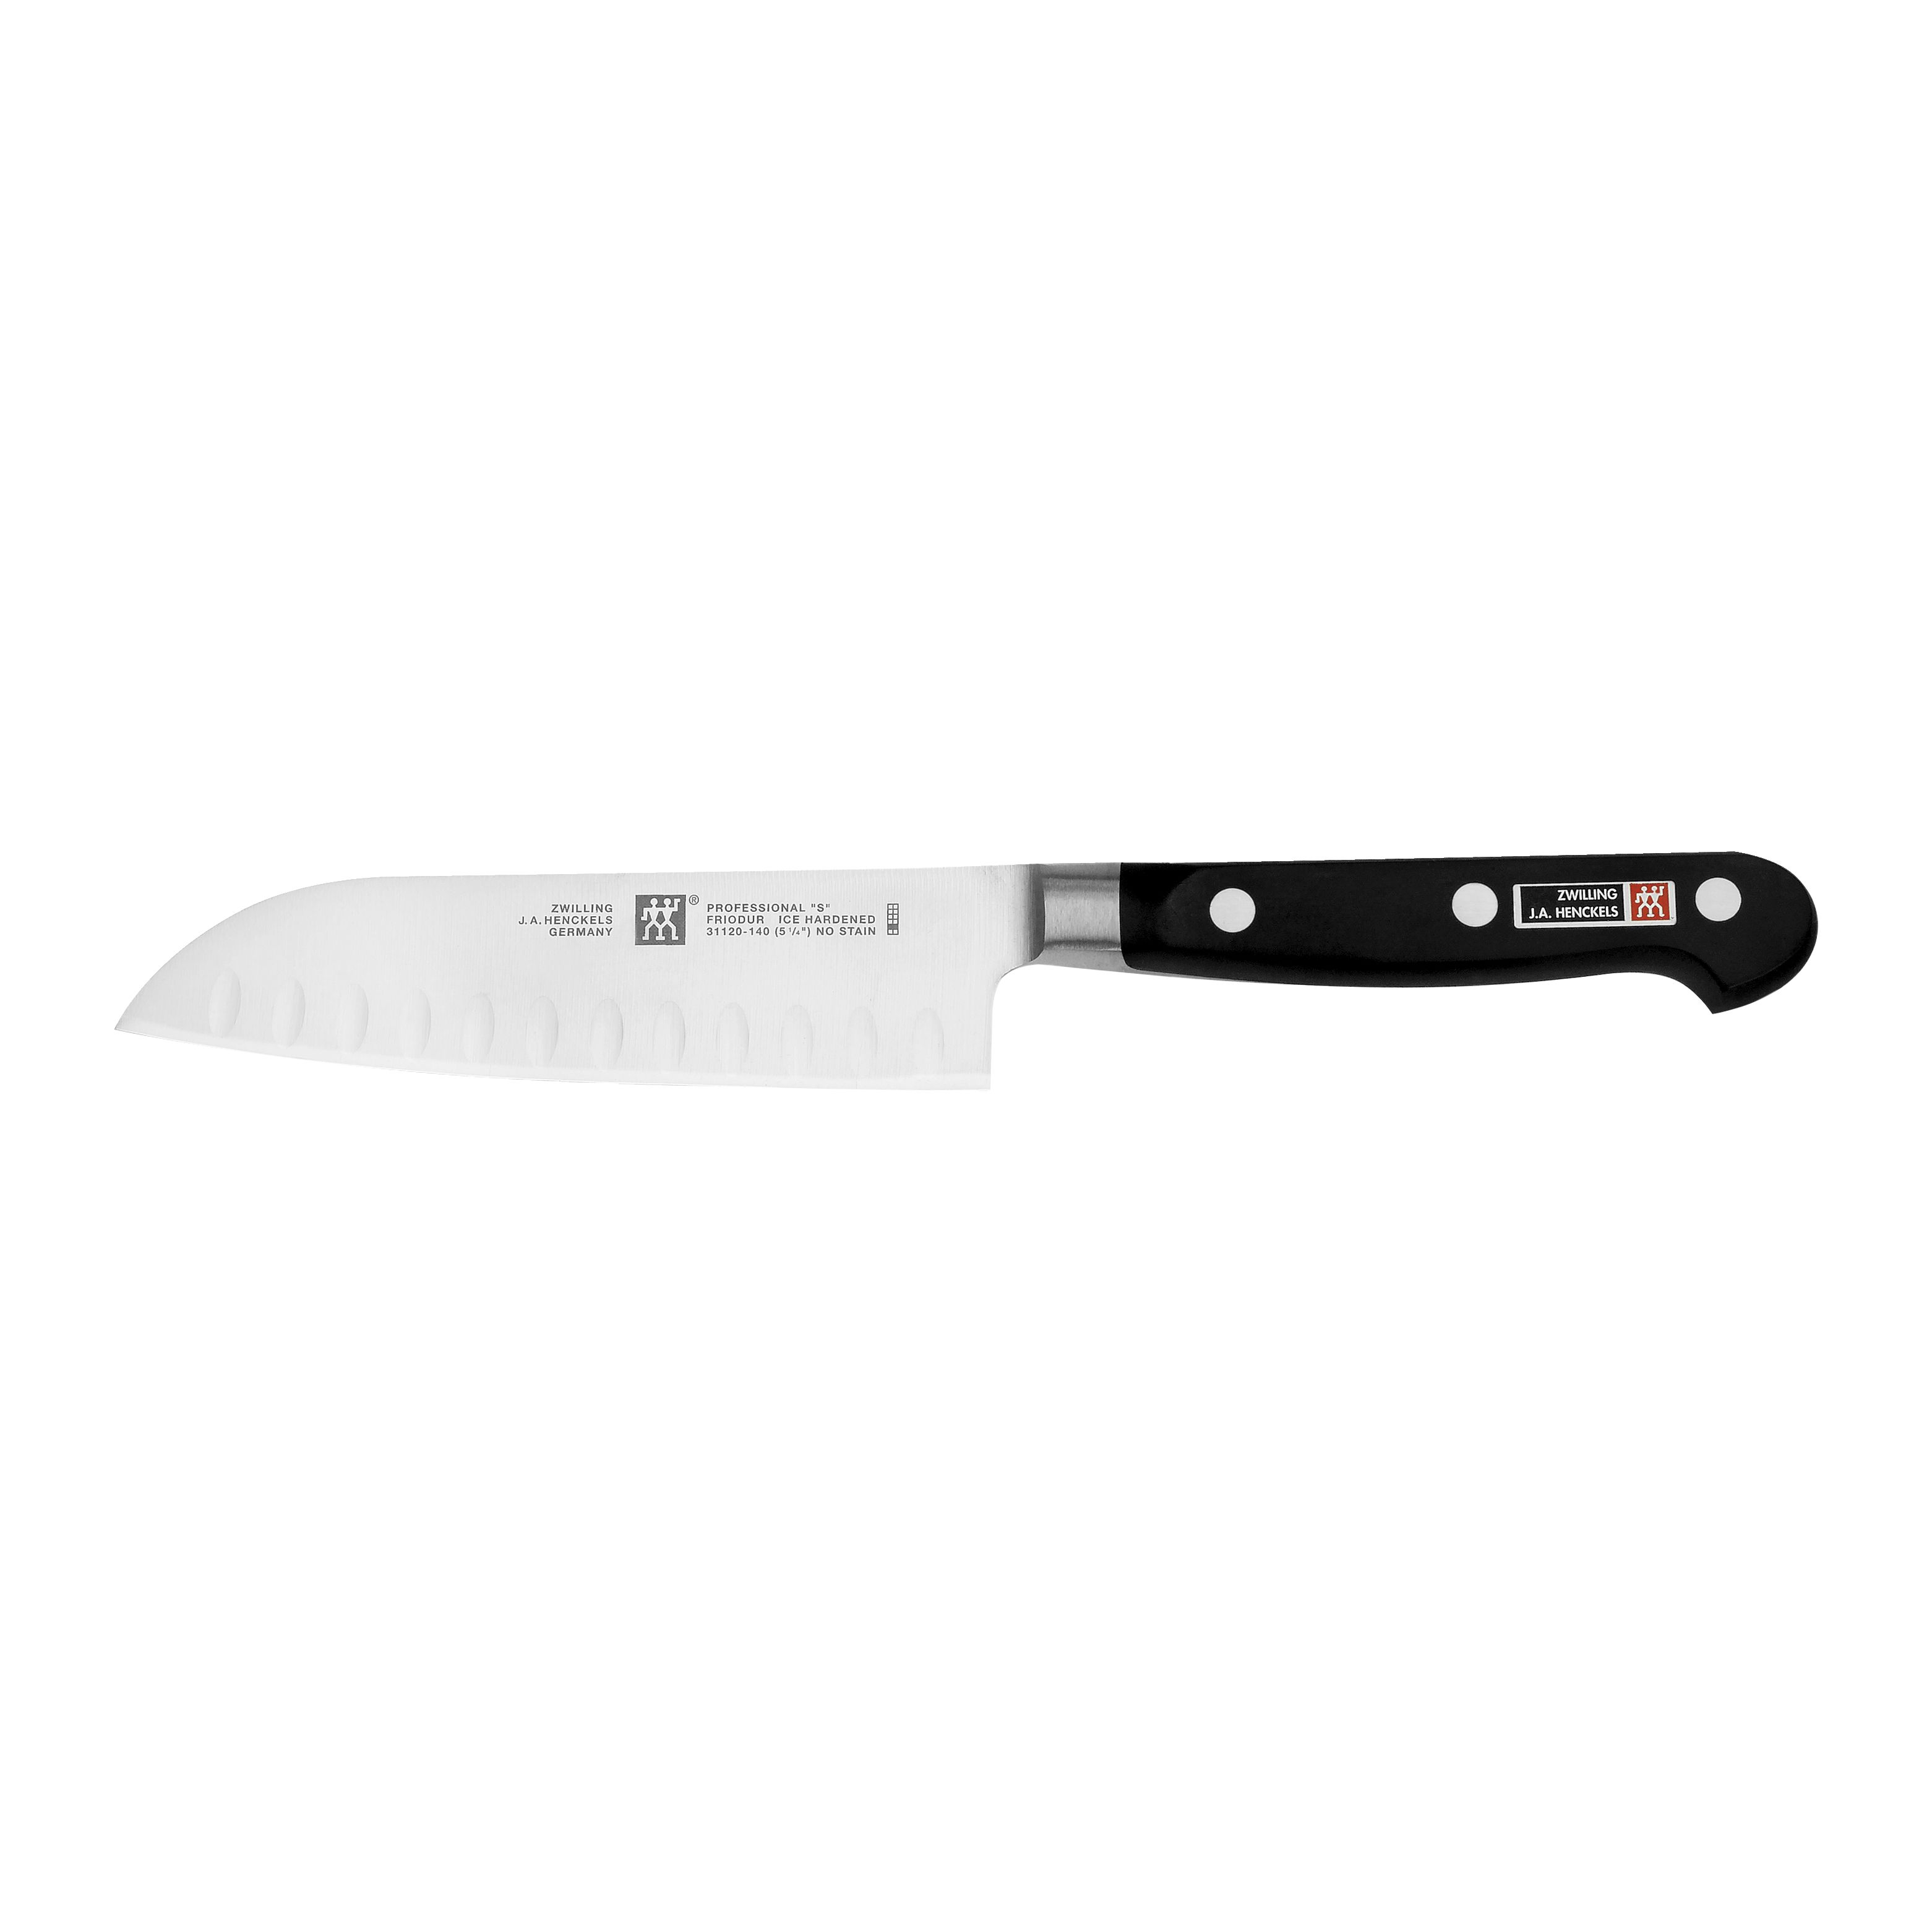 Buy ZWILLING Professional S Knife block set | ZWILLING.COM